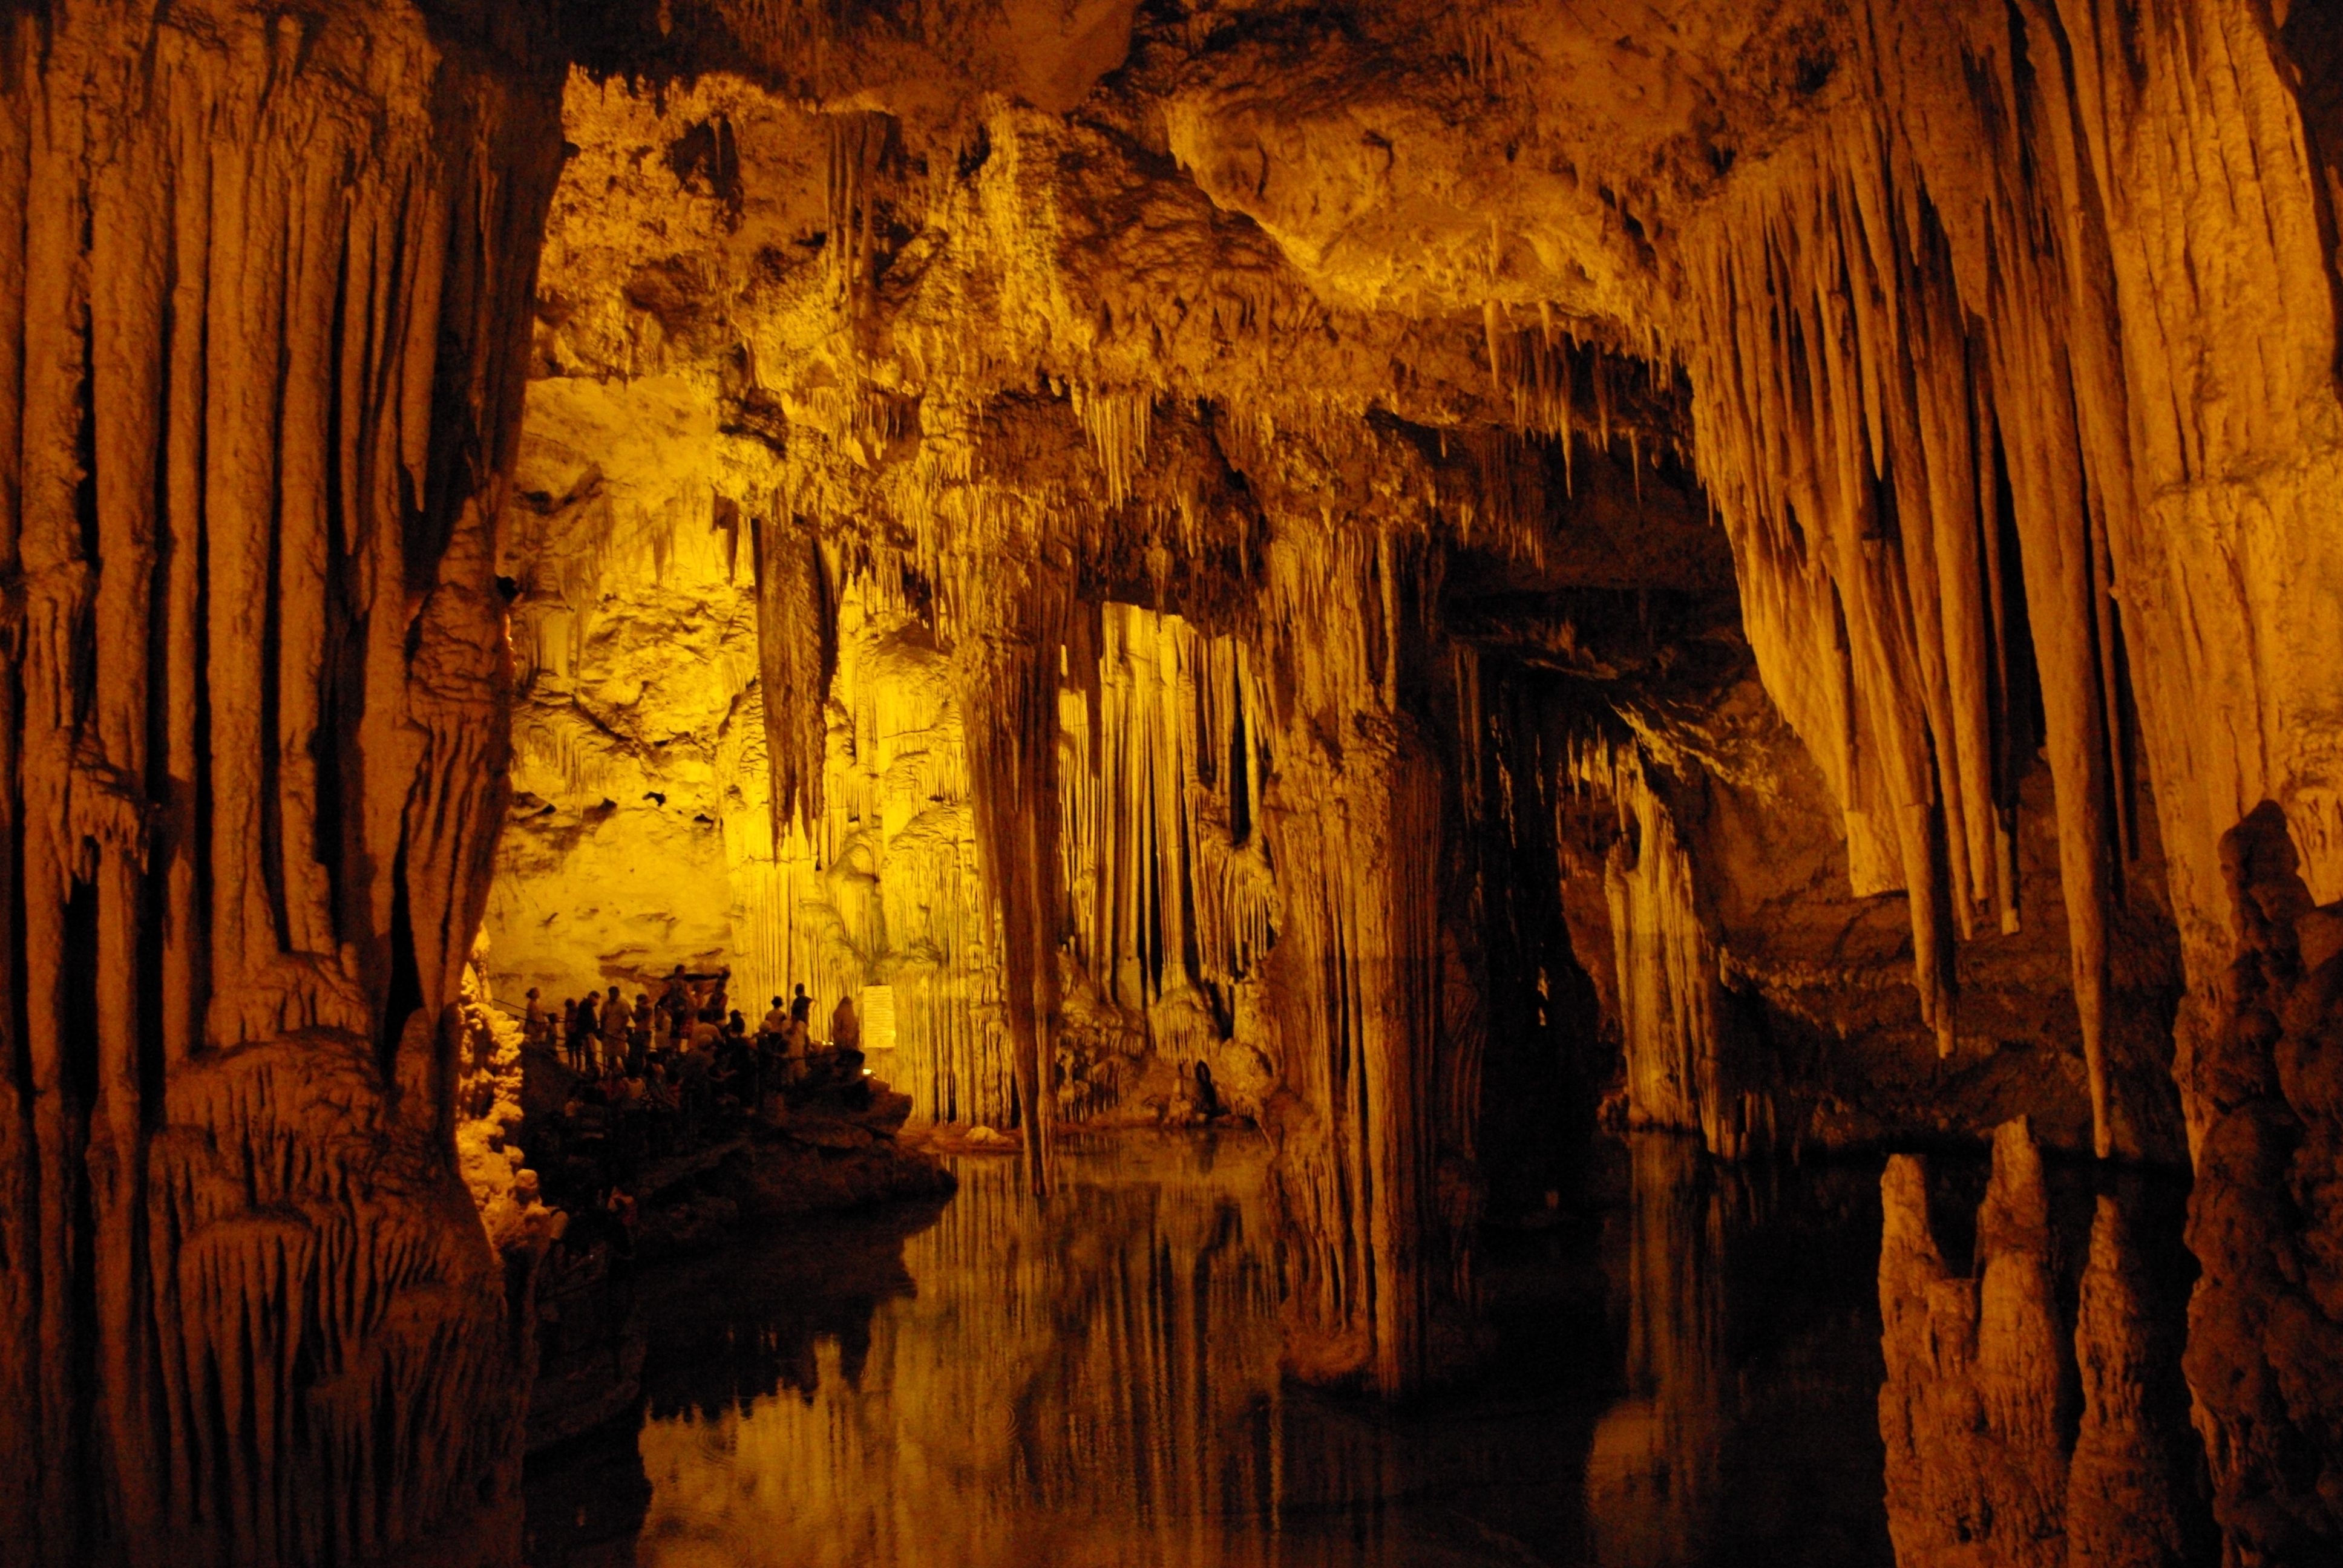 le grotte più famose e suggestive d'Italia